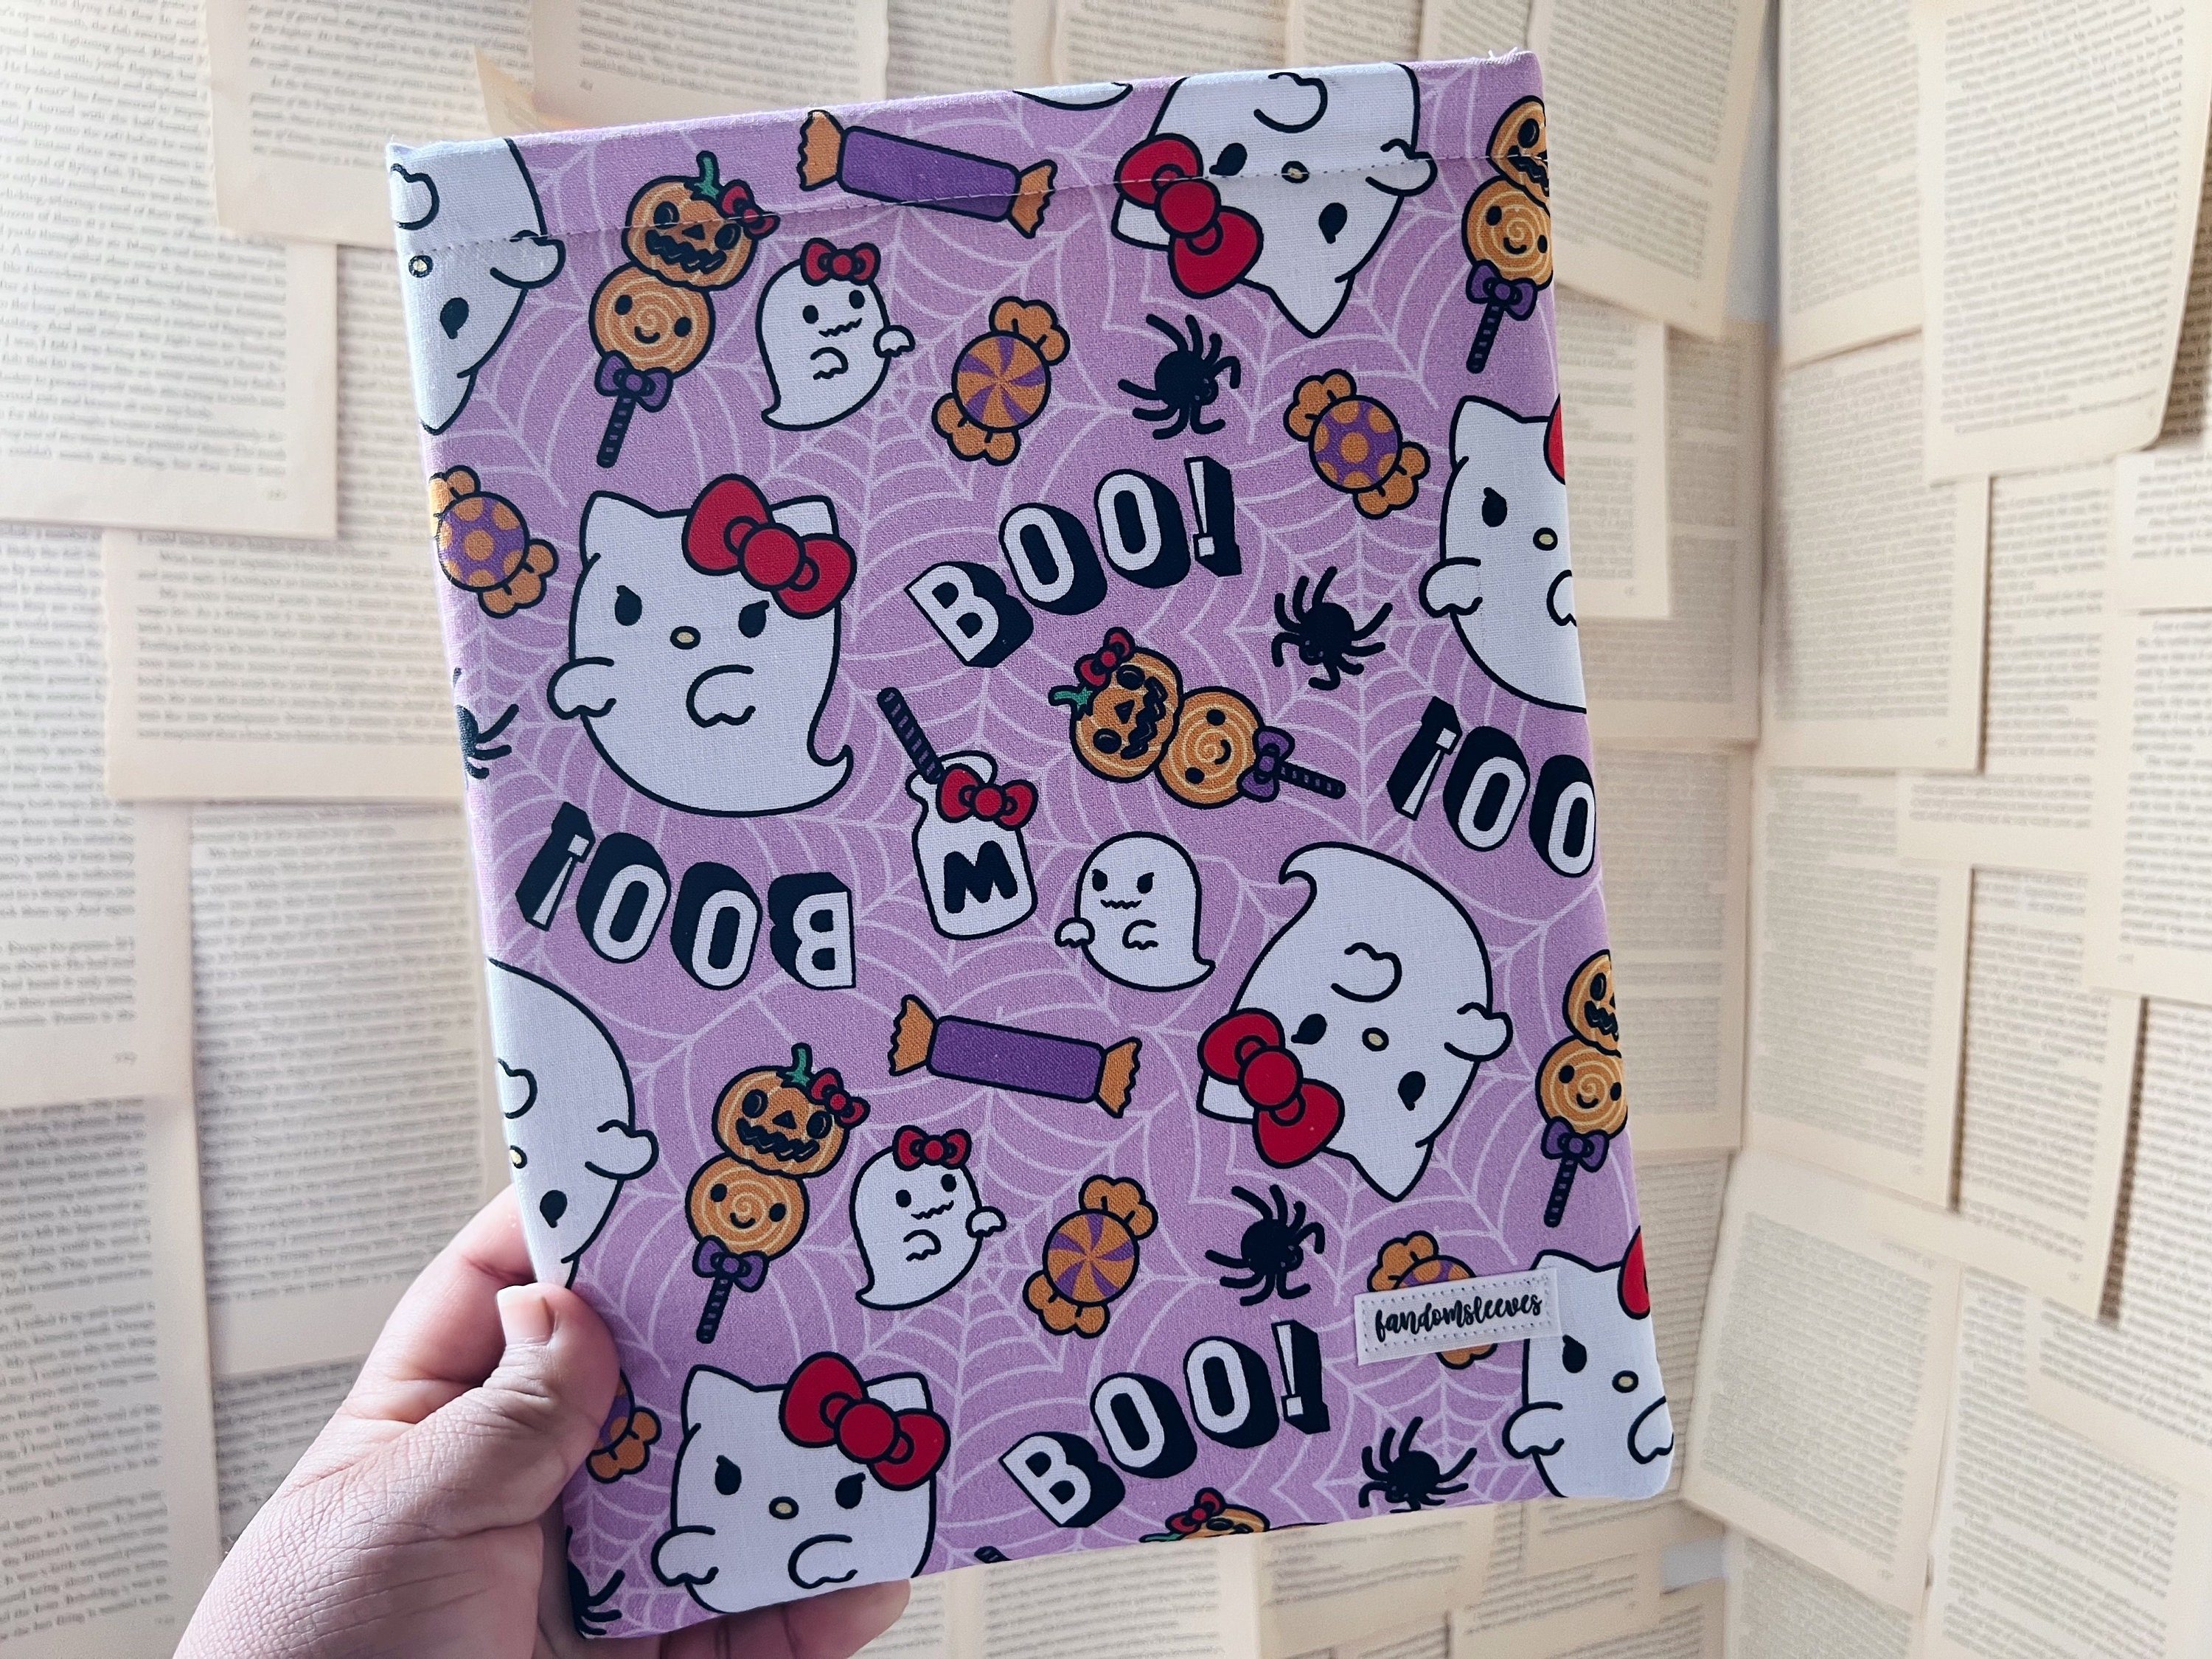 Hello Kitty Sticker Book Treasury, USED Over 350 Stickers Sanrio